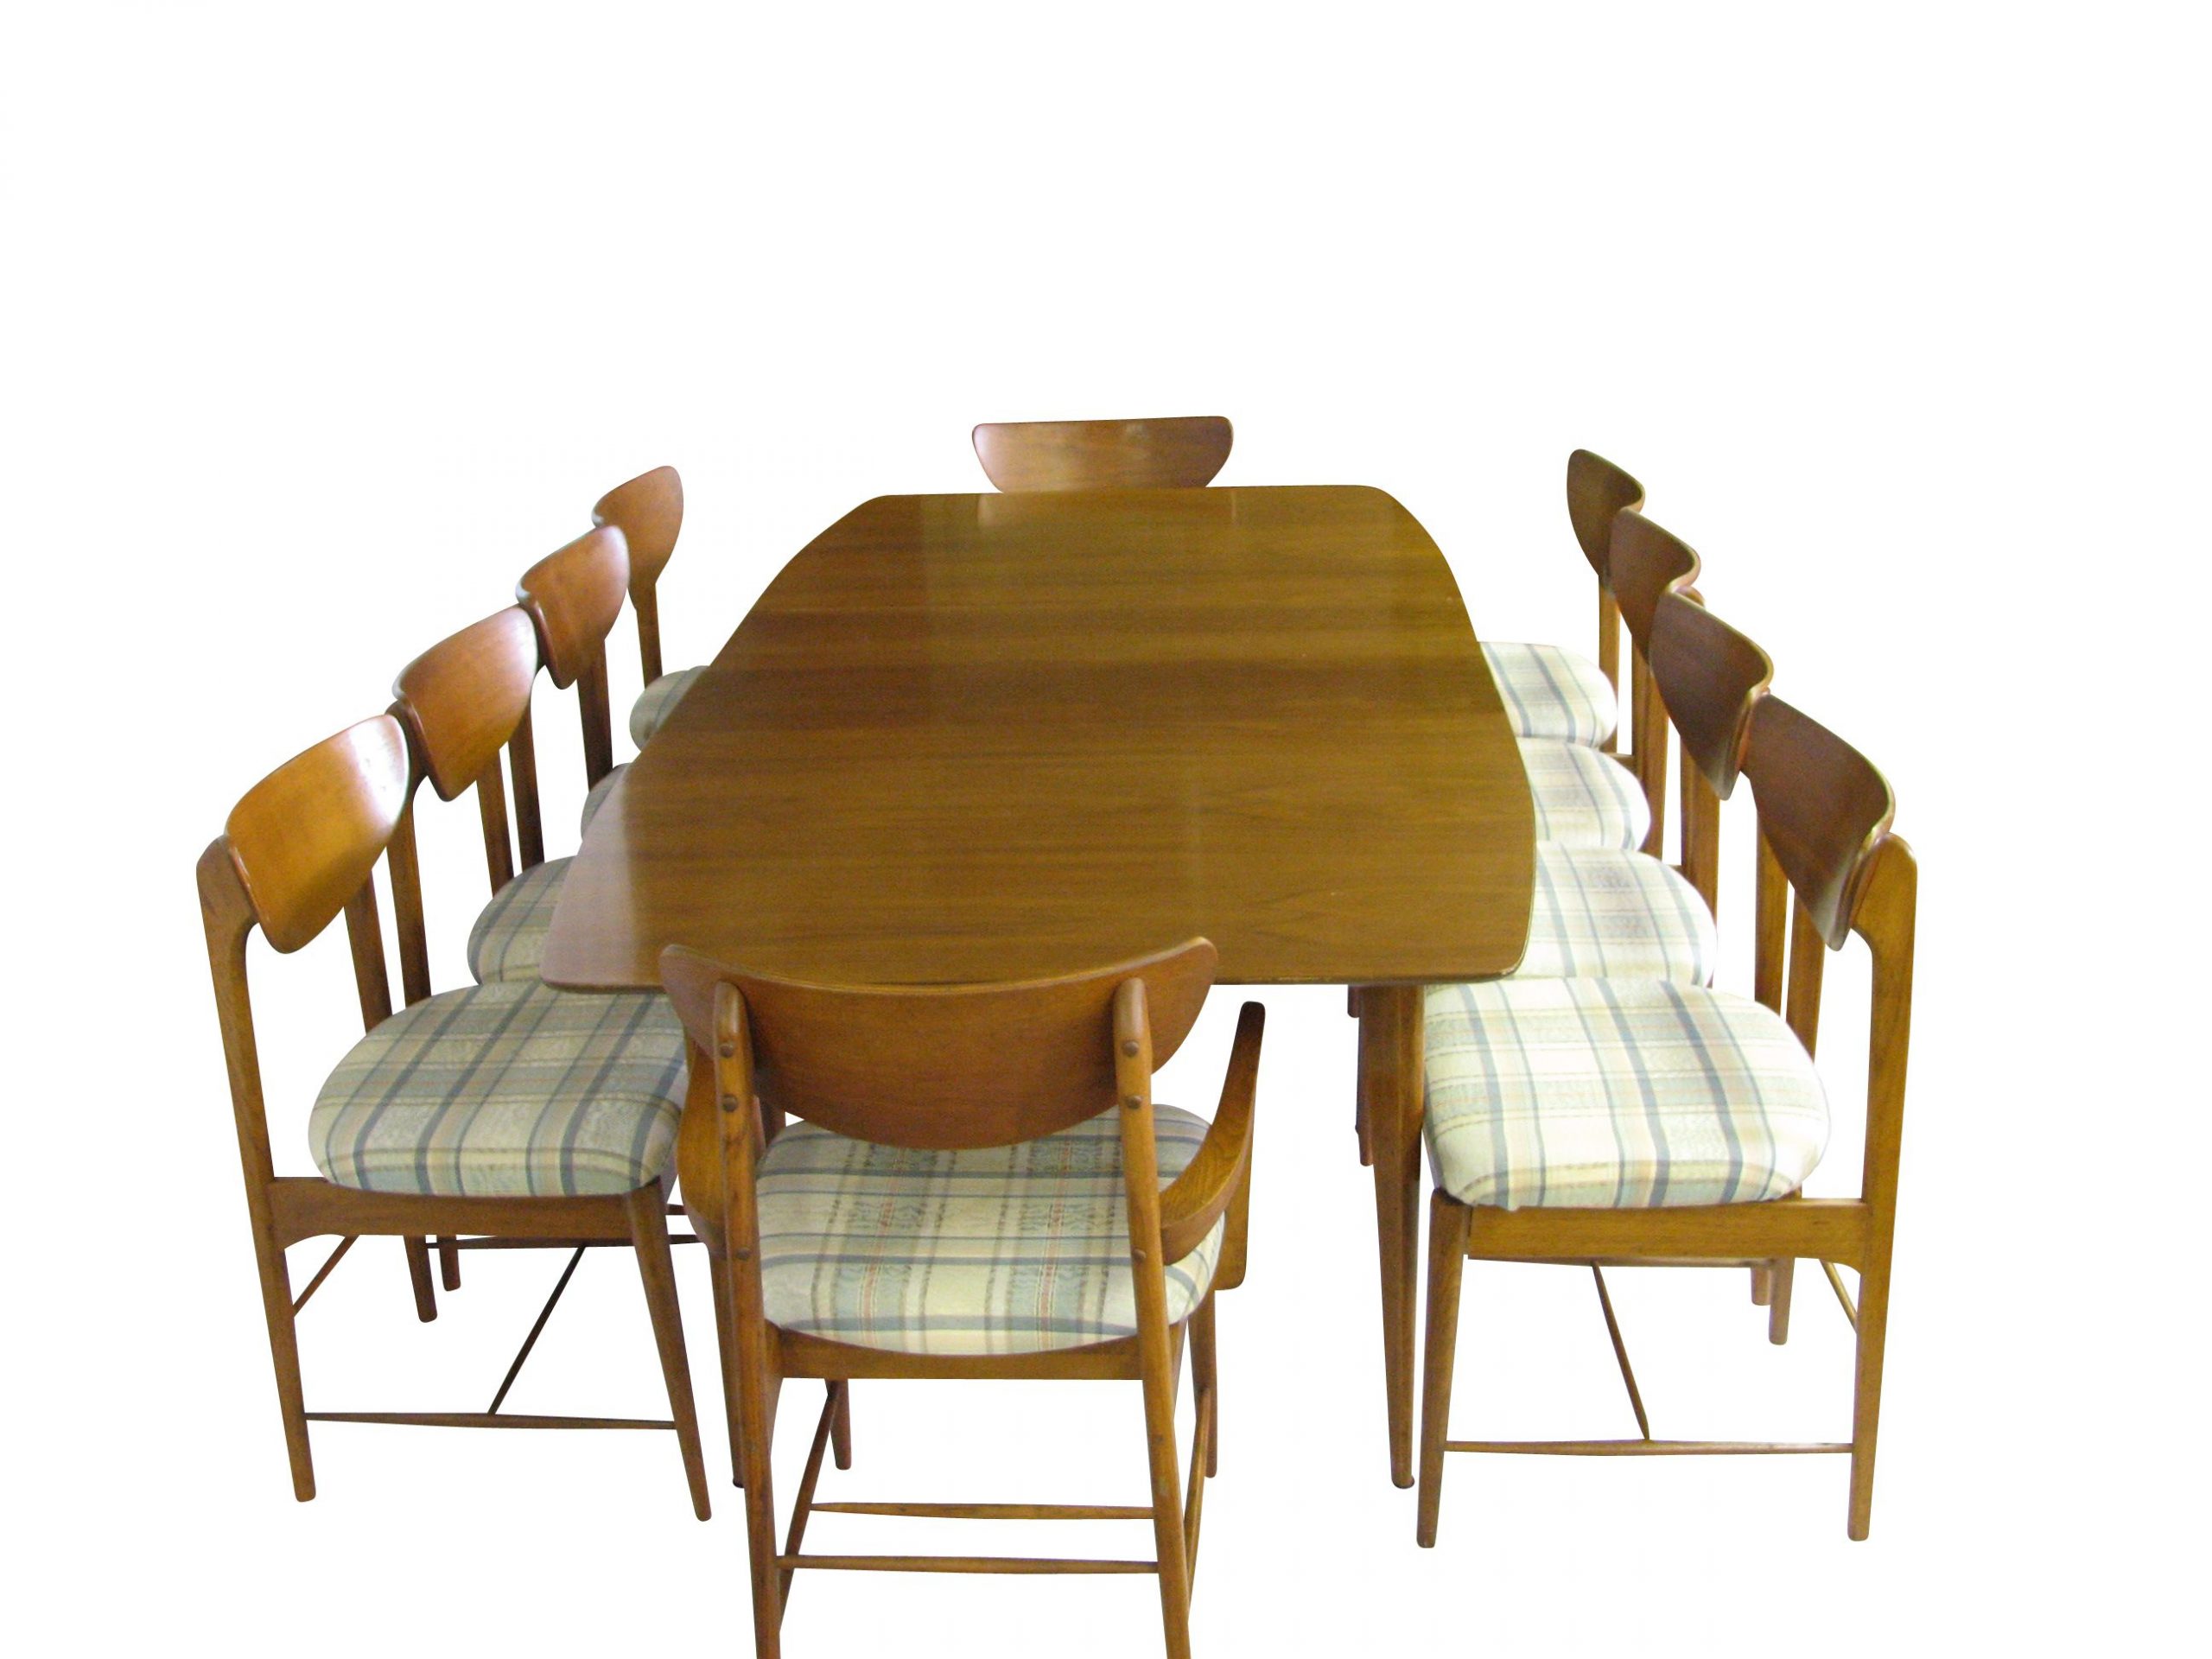 Kroehler Dining Set Dining Set Furniture Dining with regard to size 2592 X 1944